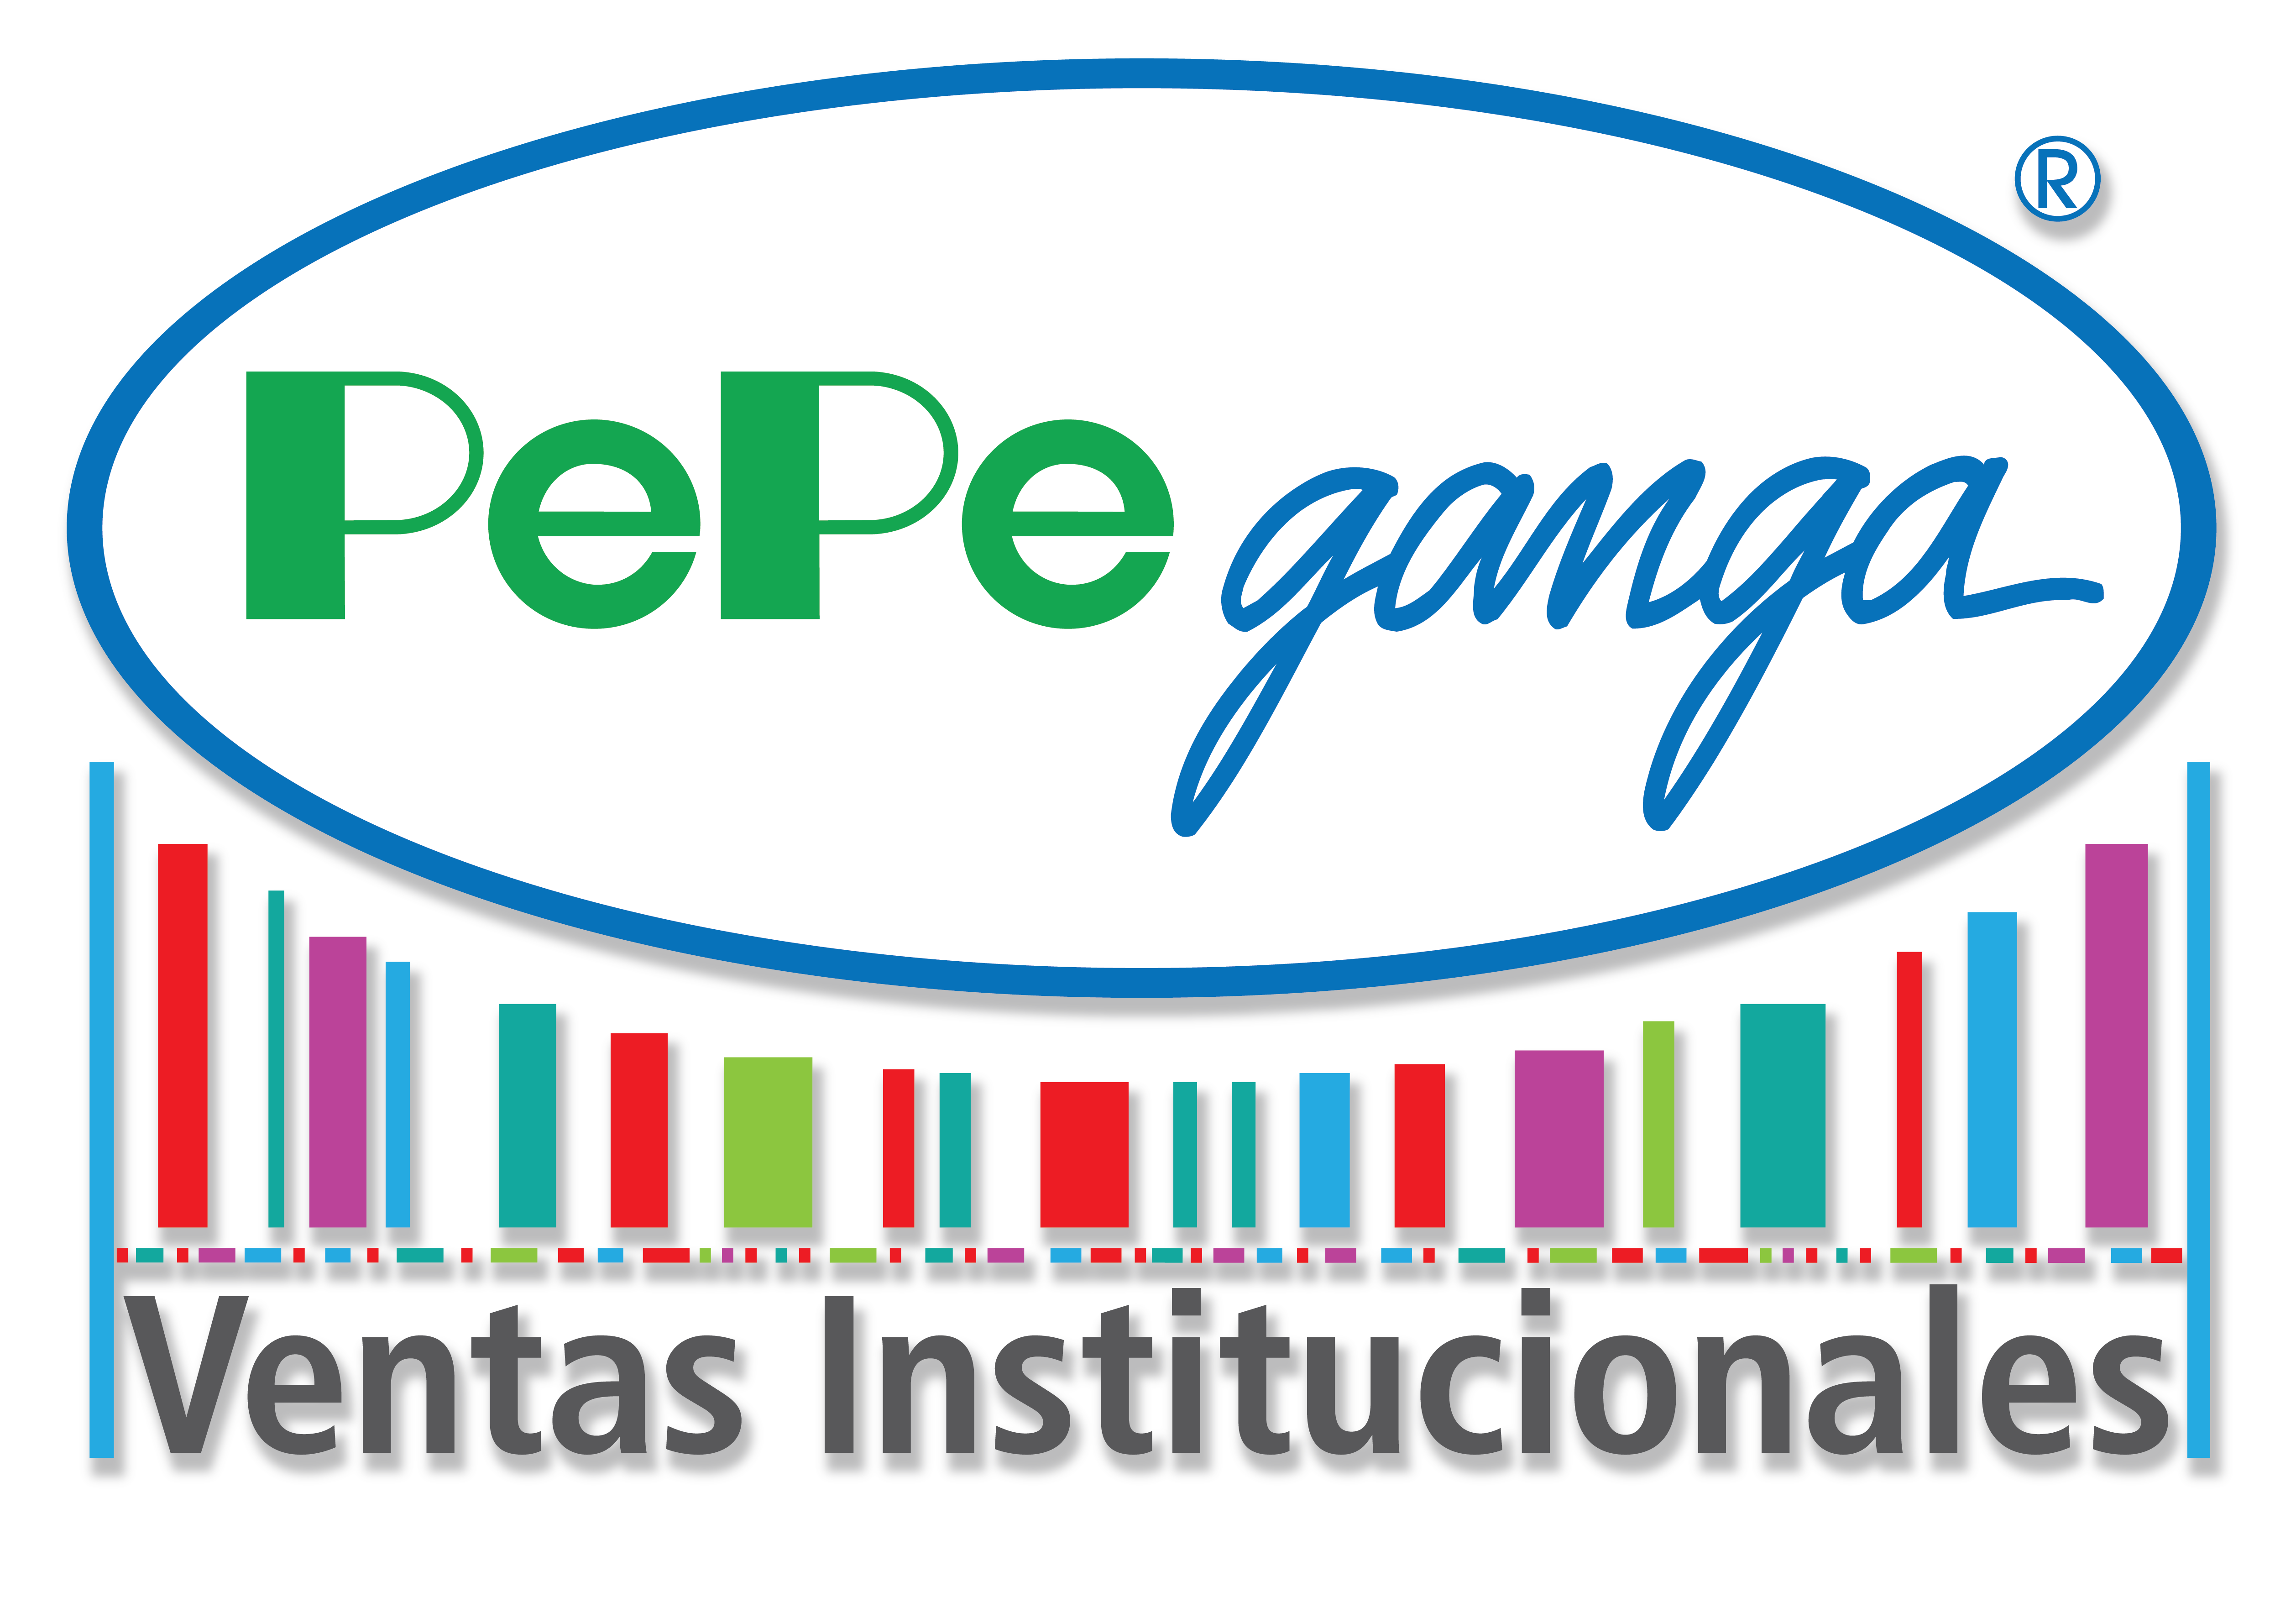 Pepe Ganga - Apps on Google Play